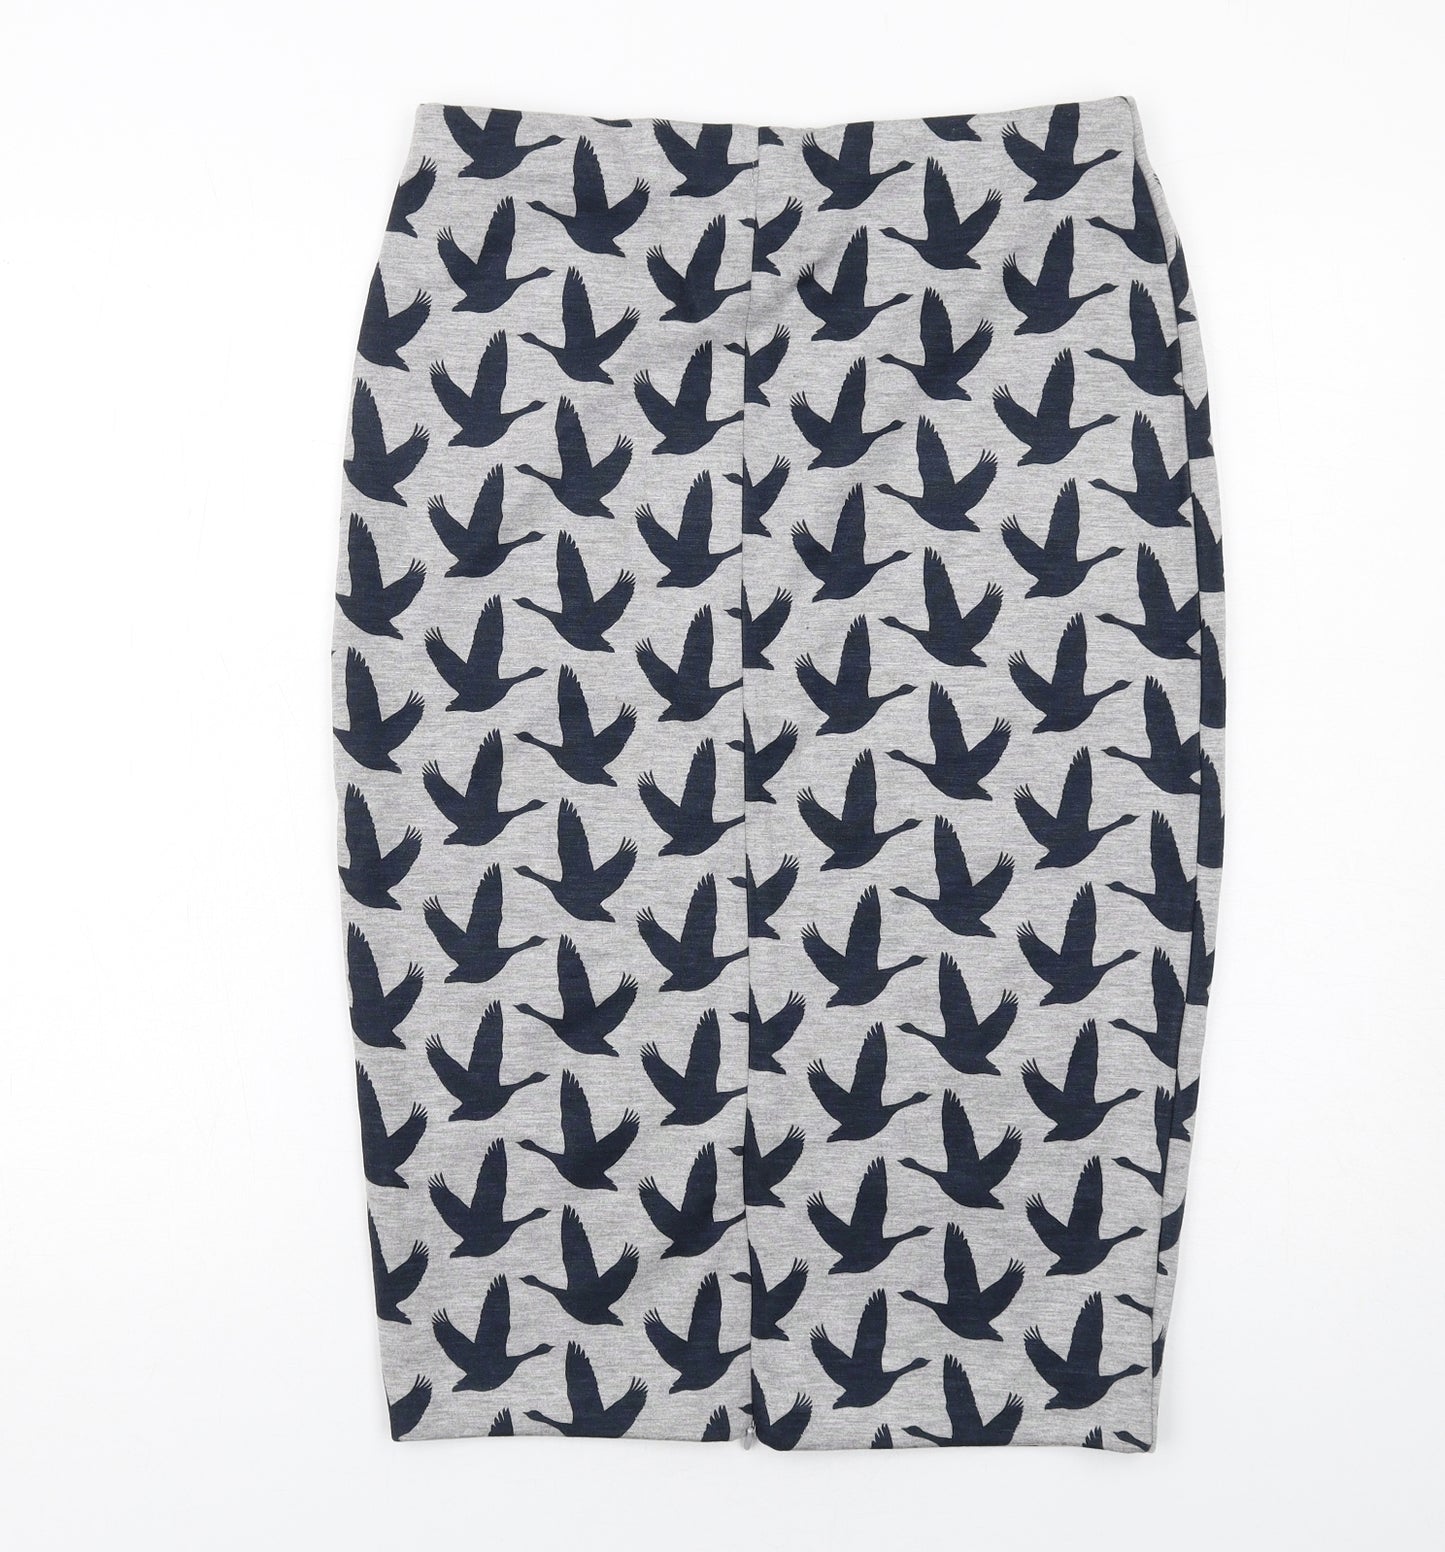 H&M Womens Grey Geometric Polyester Bandage Skirt Size M Zip - Bird pattern